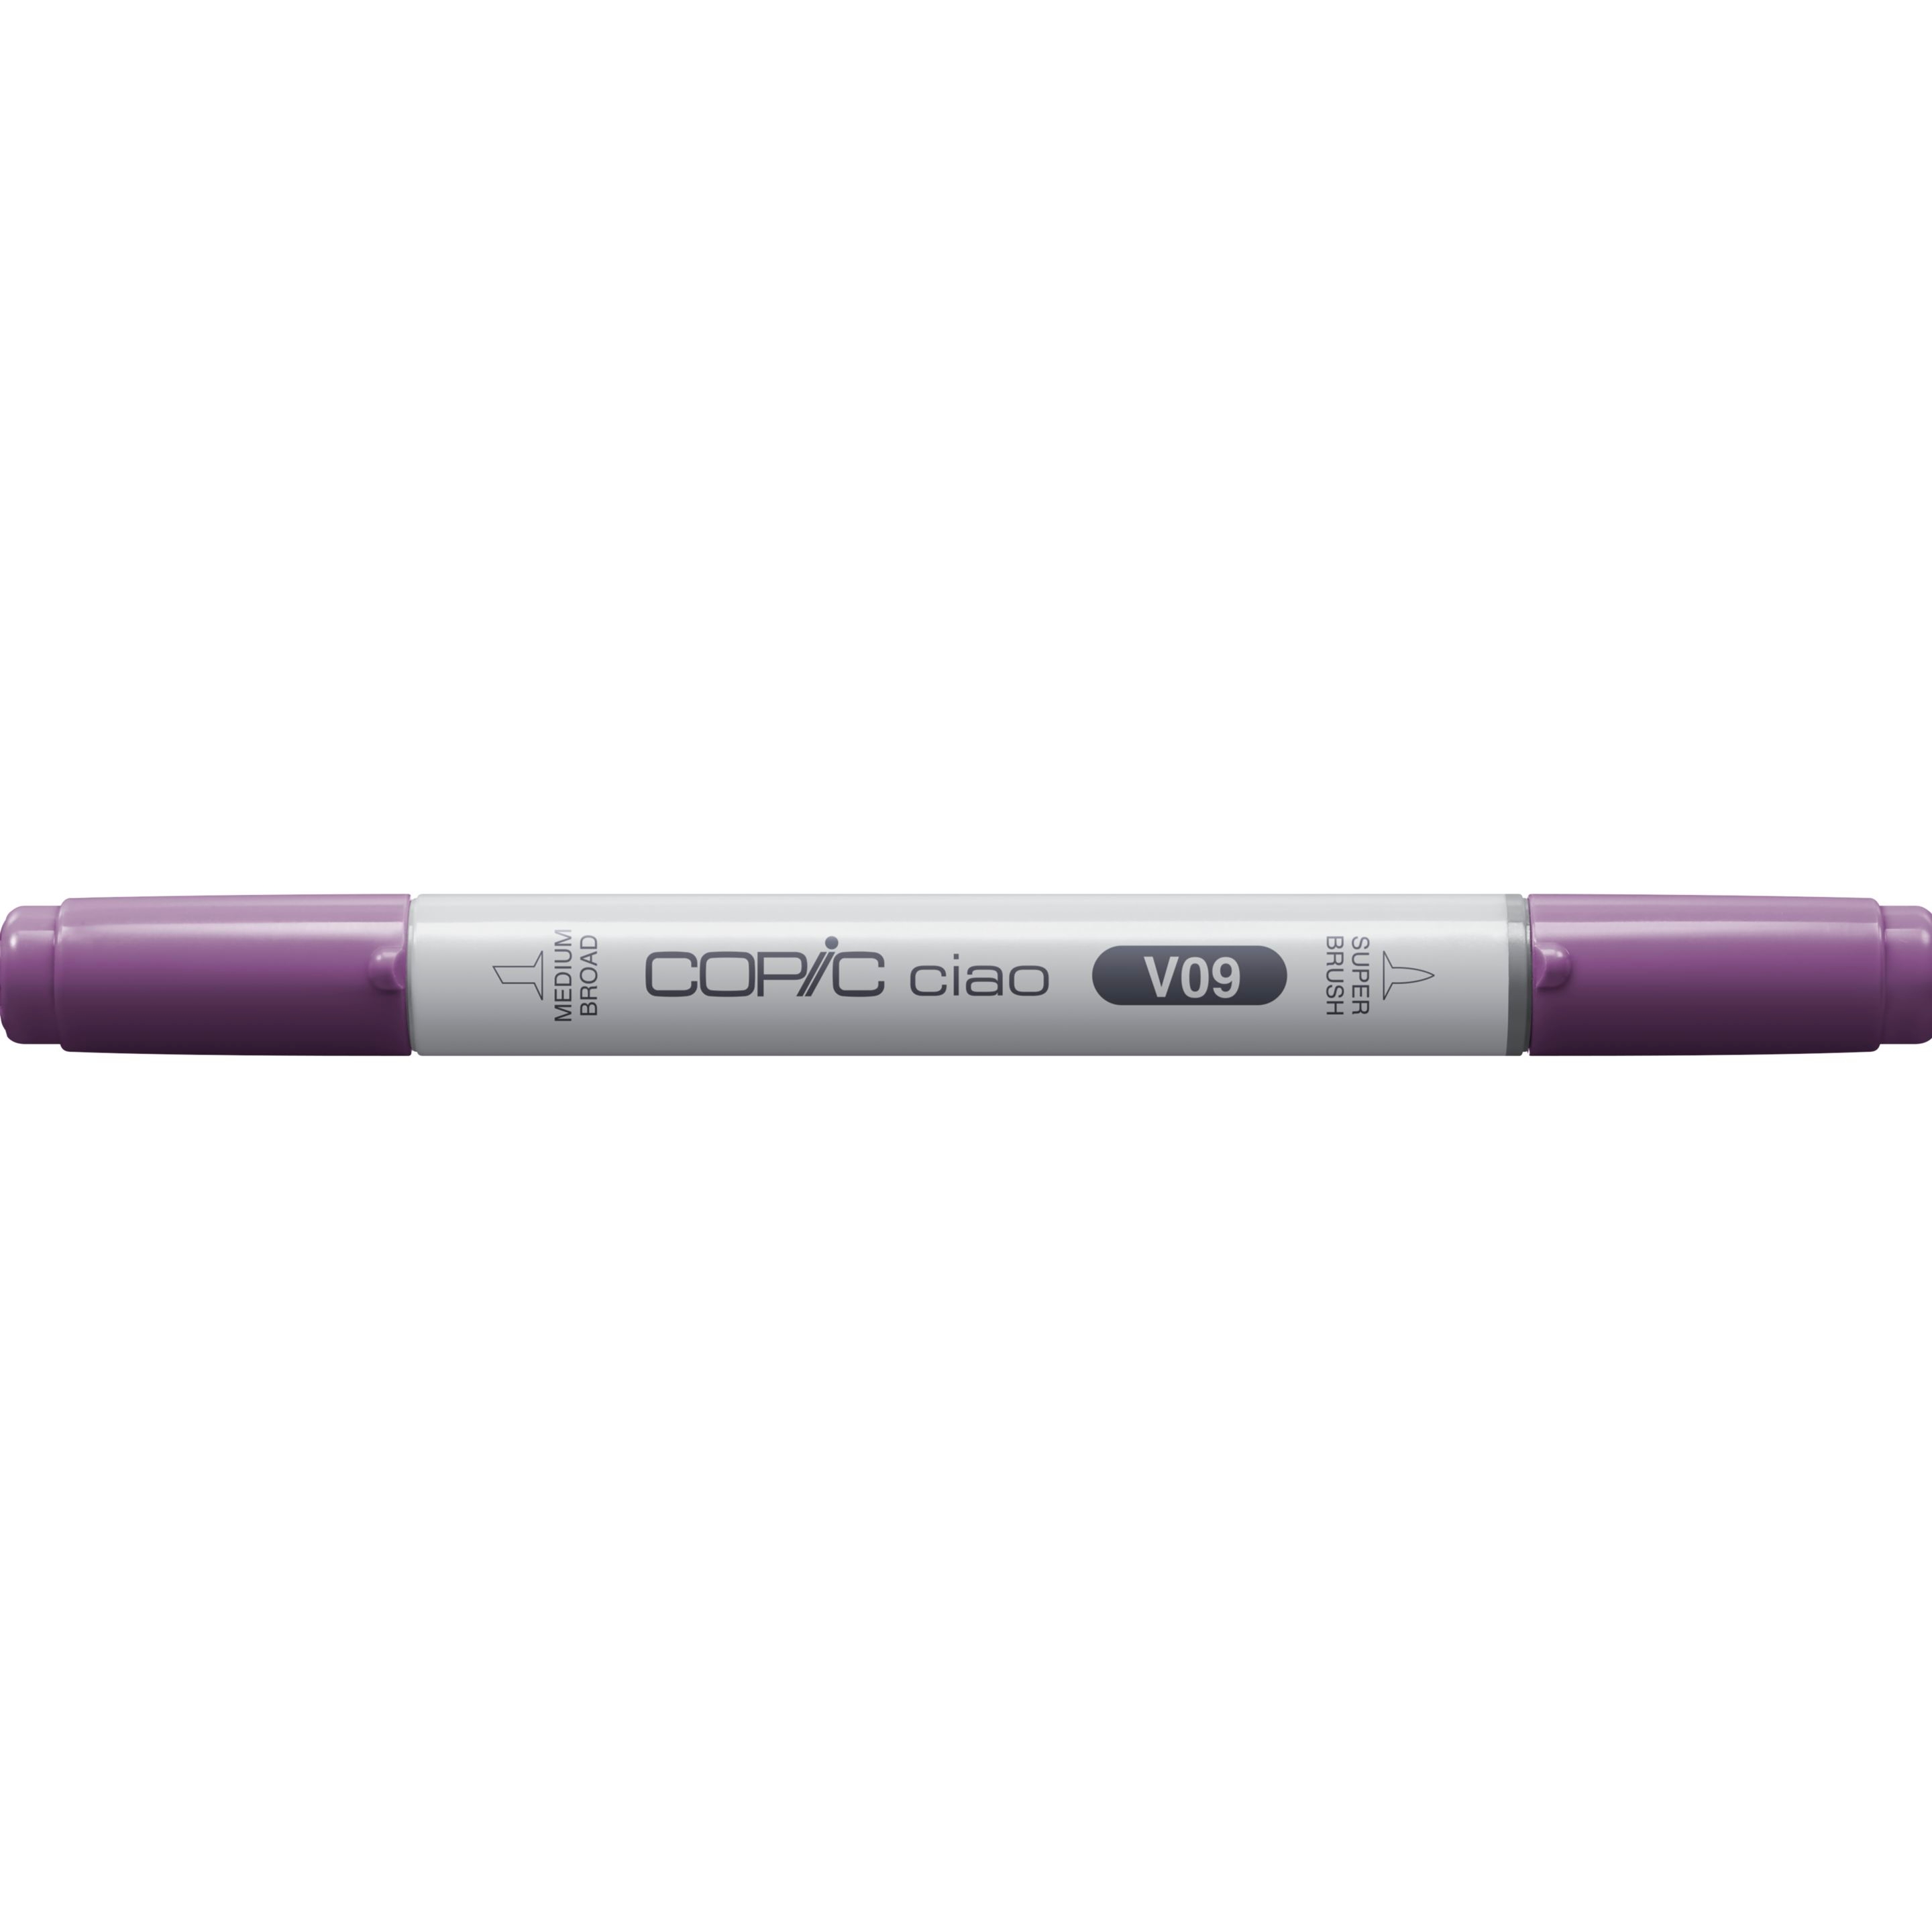 COPIC Marker Ciao 2207527 V09 - Violet